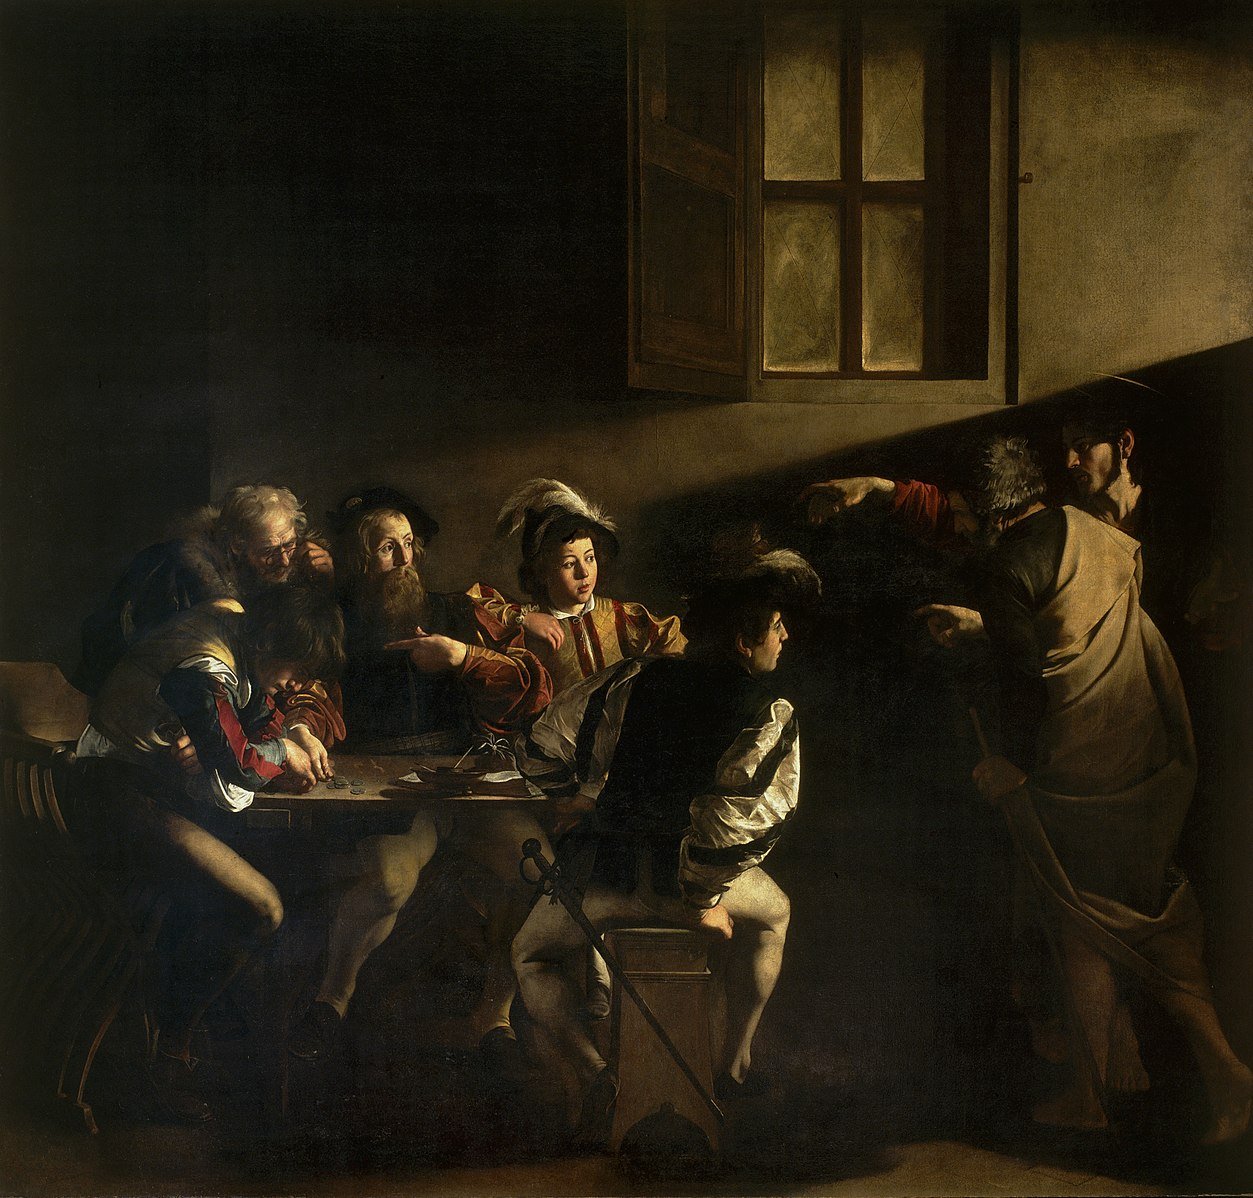 The Calling of Saint Matthew by Caravaggio. c. 1599-1600.